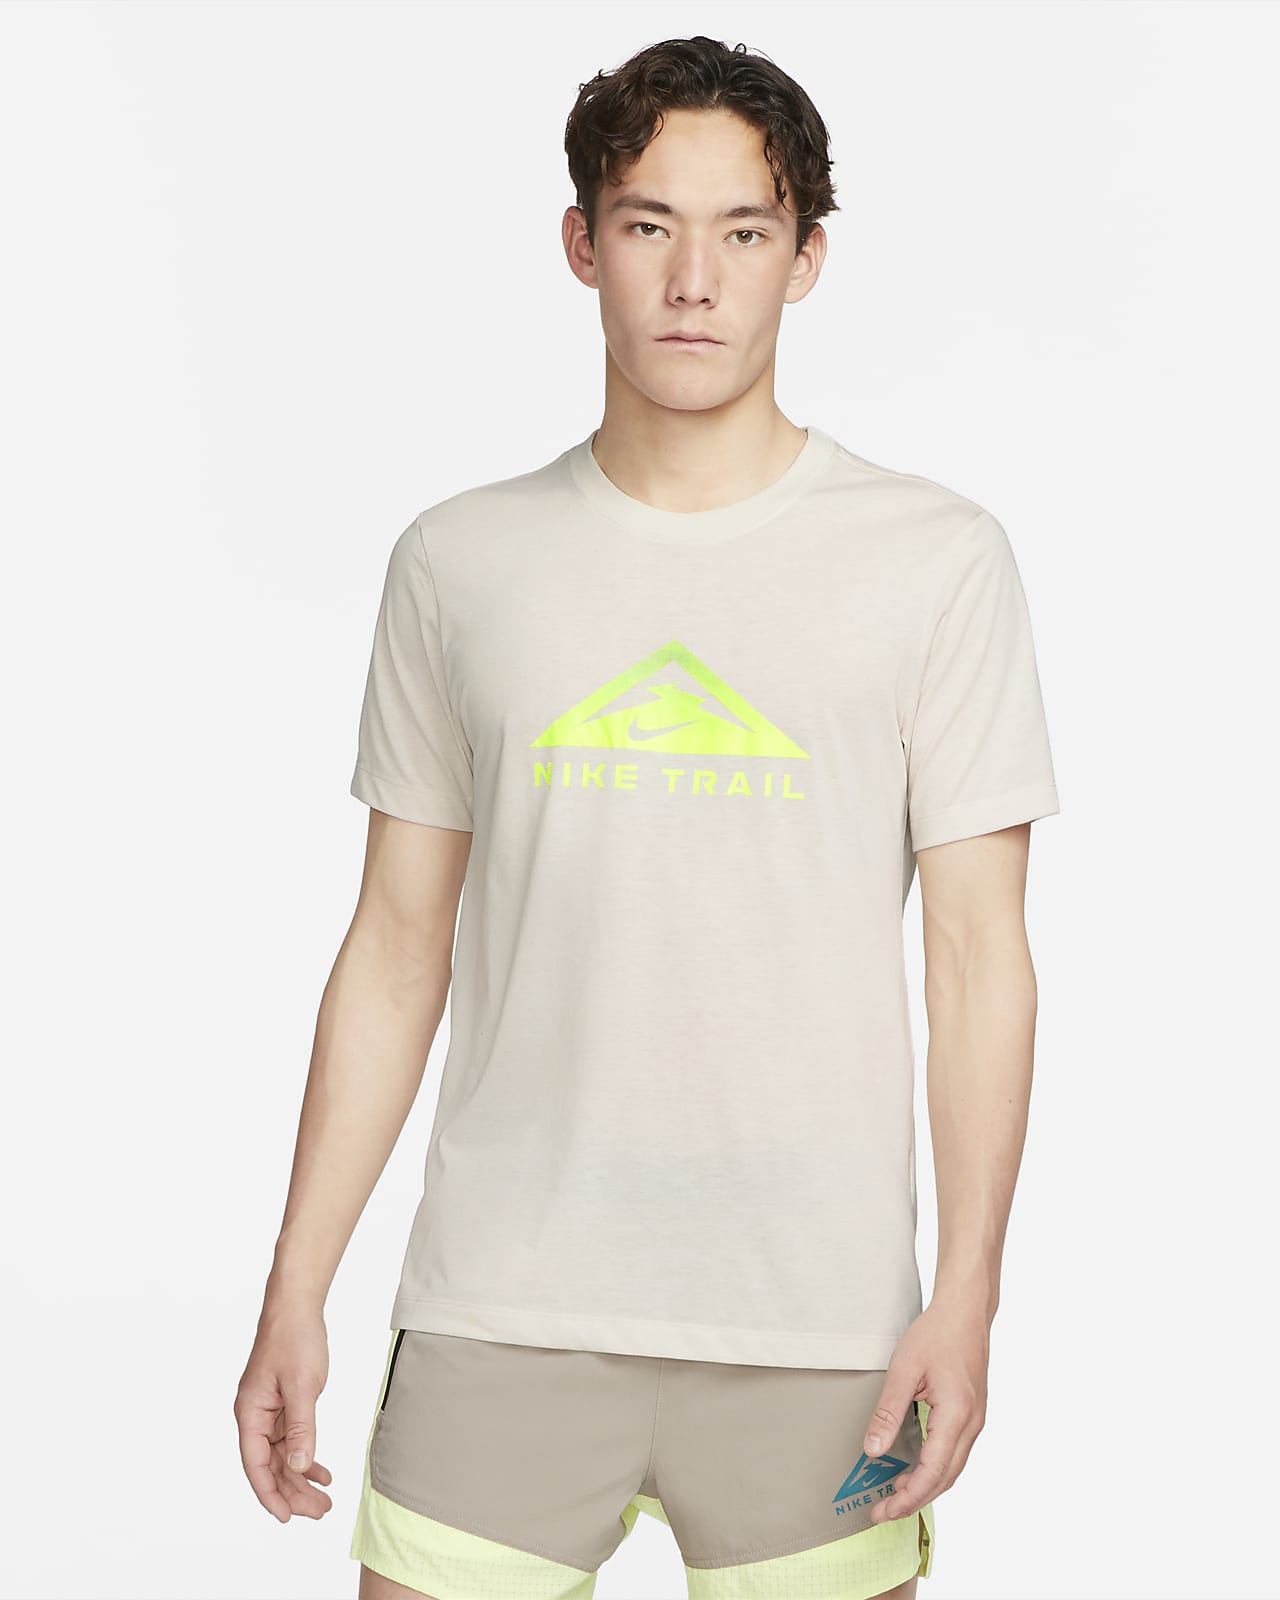 Nike Dri-FIT Short-Sleeve Trail Running T-Shirt